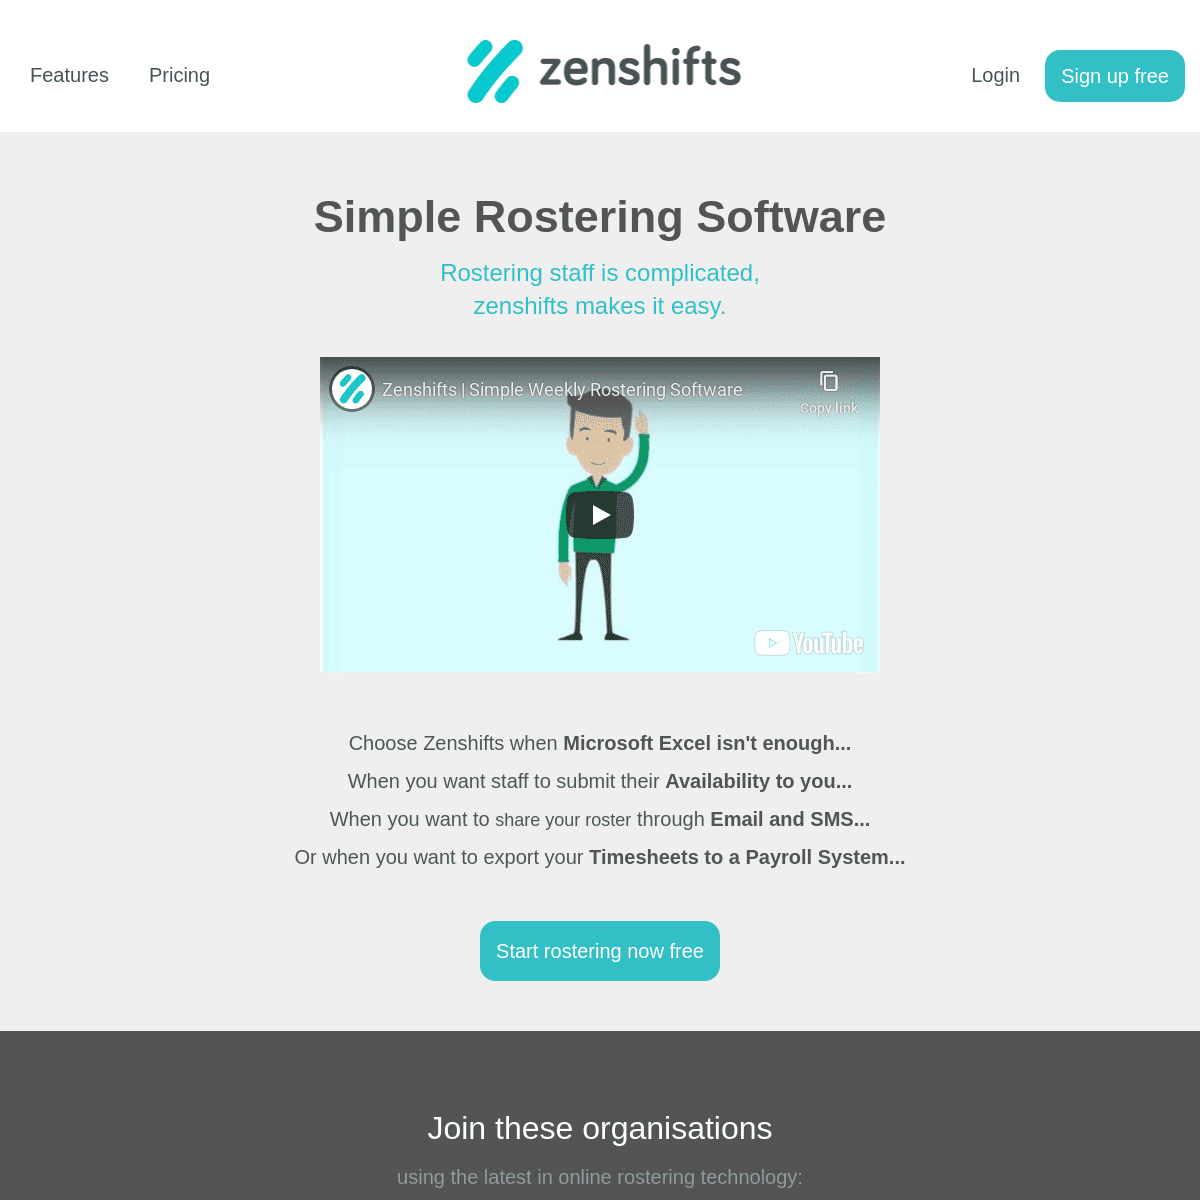 A complete backup of zenshifts.com